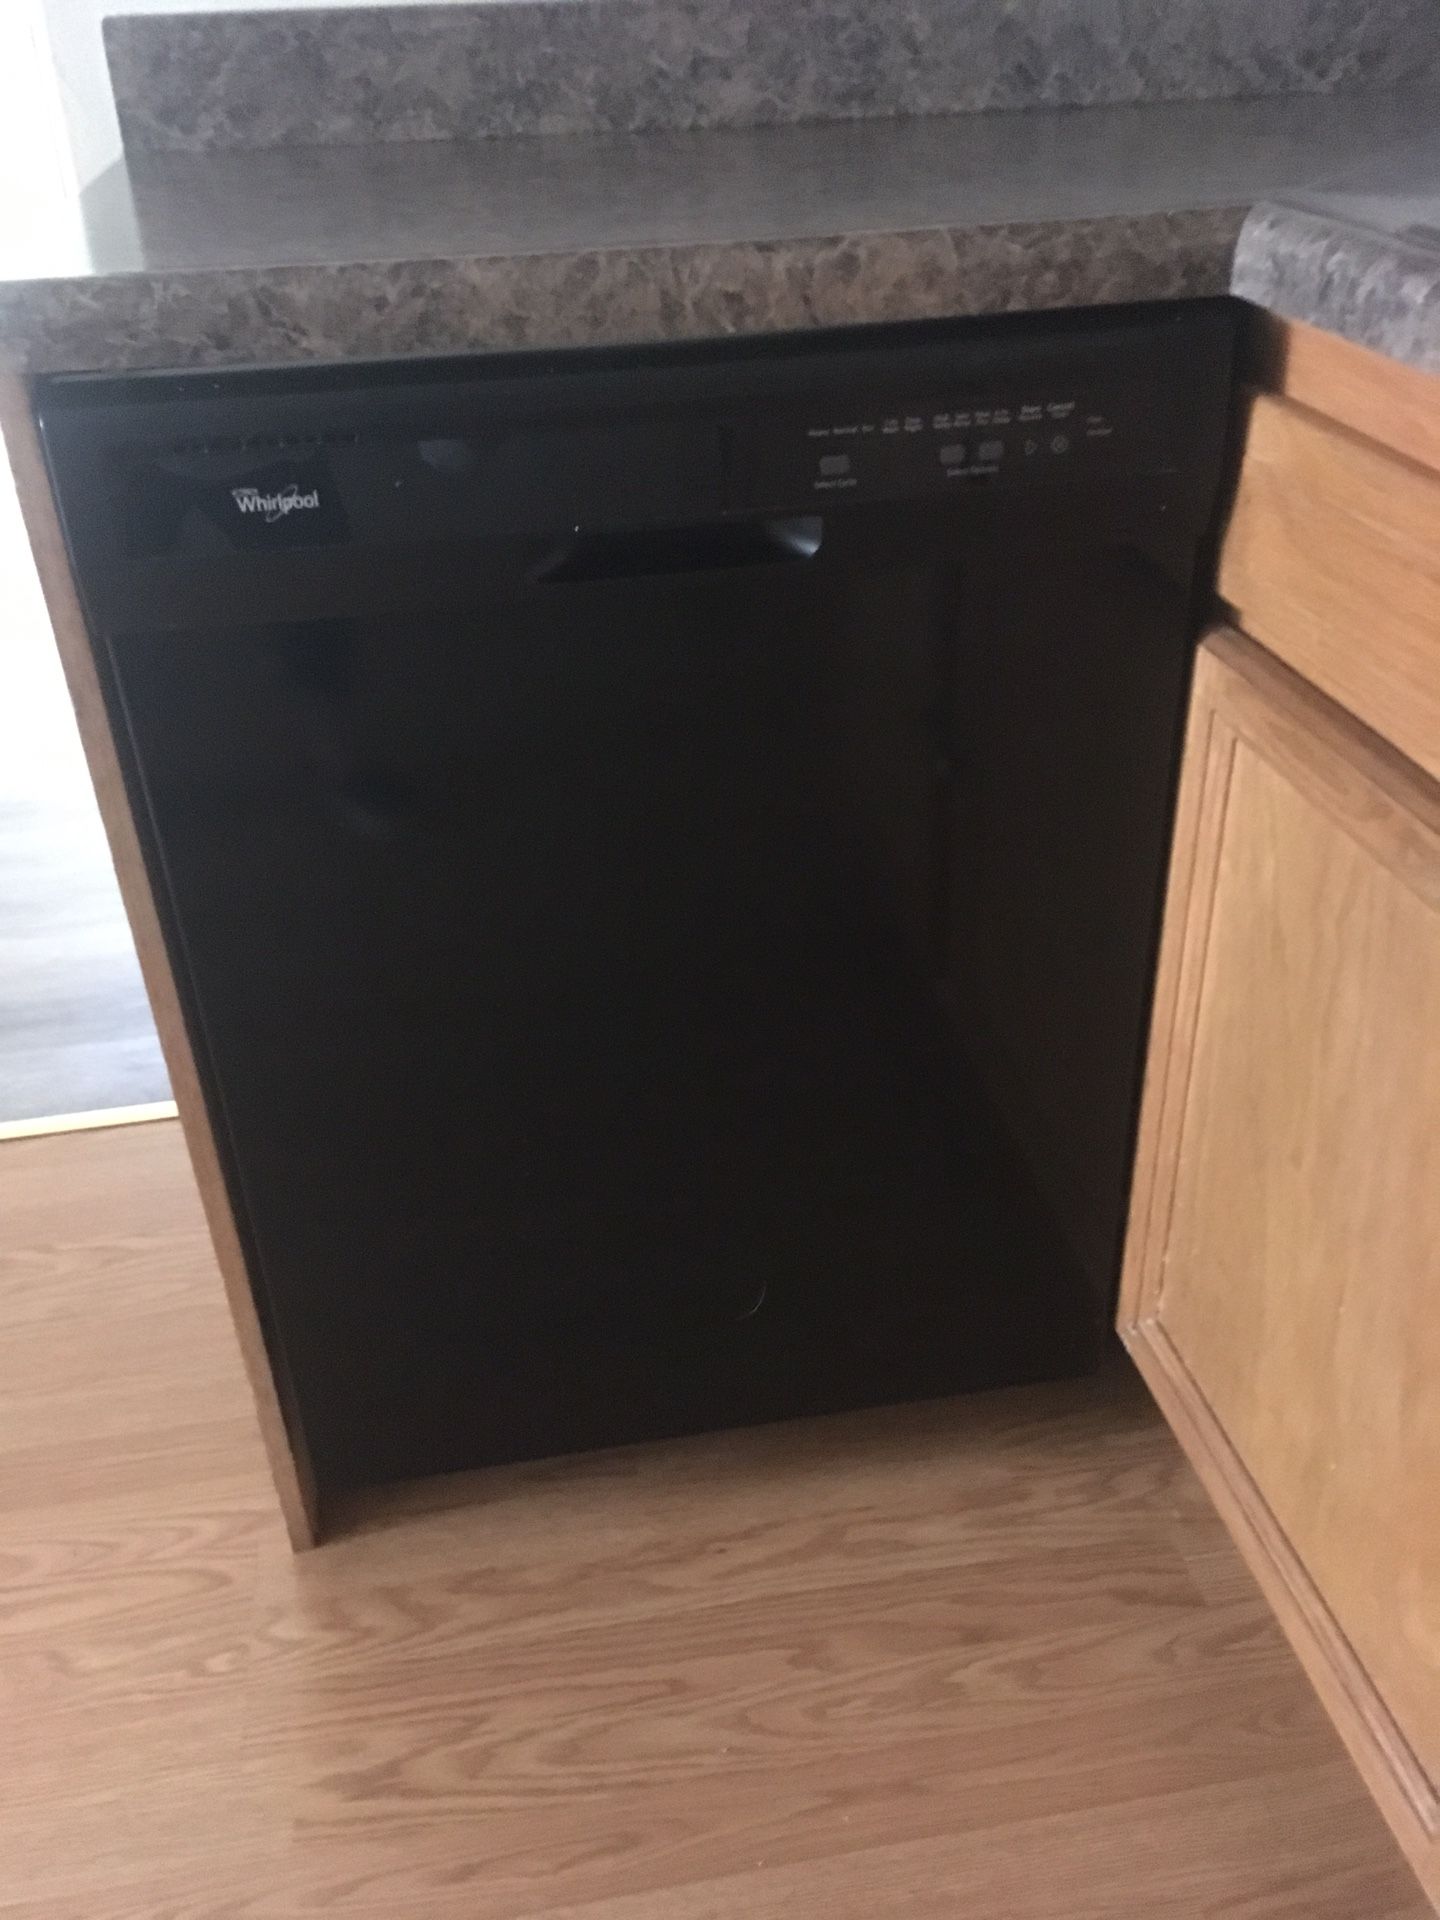 Black whirlpool dishwasher